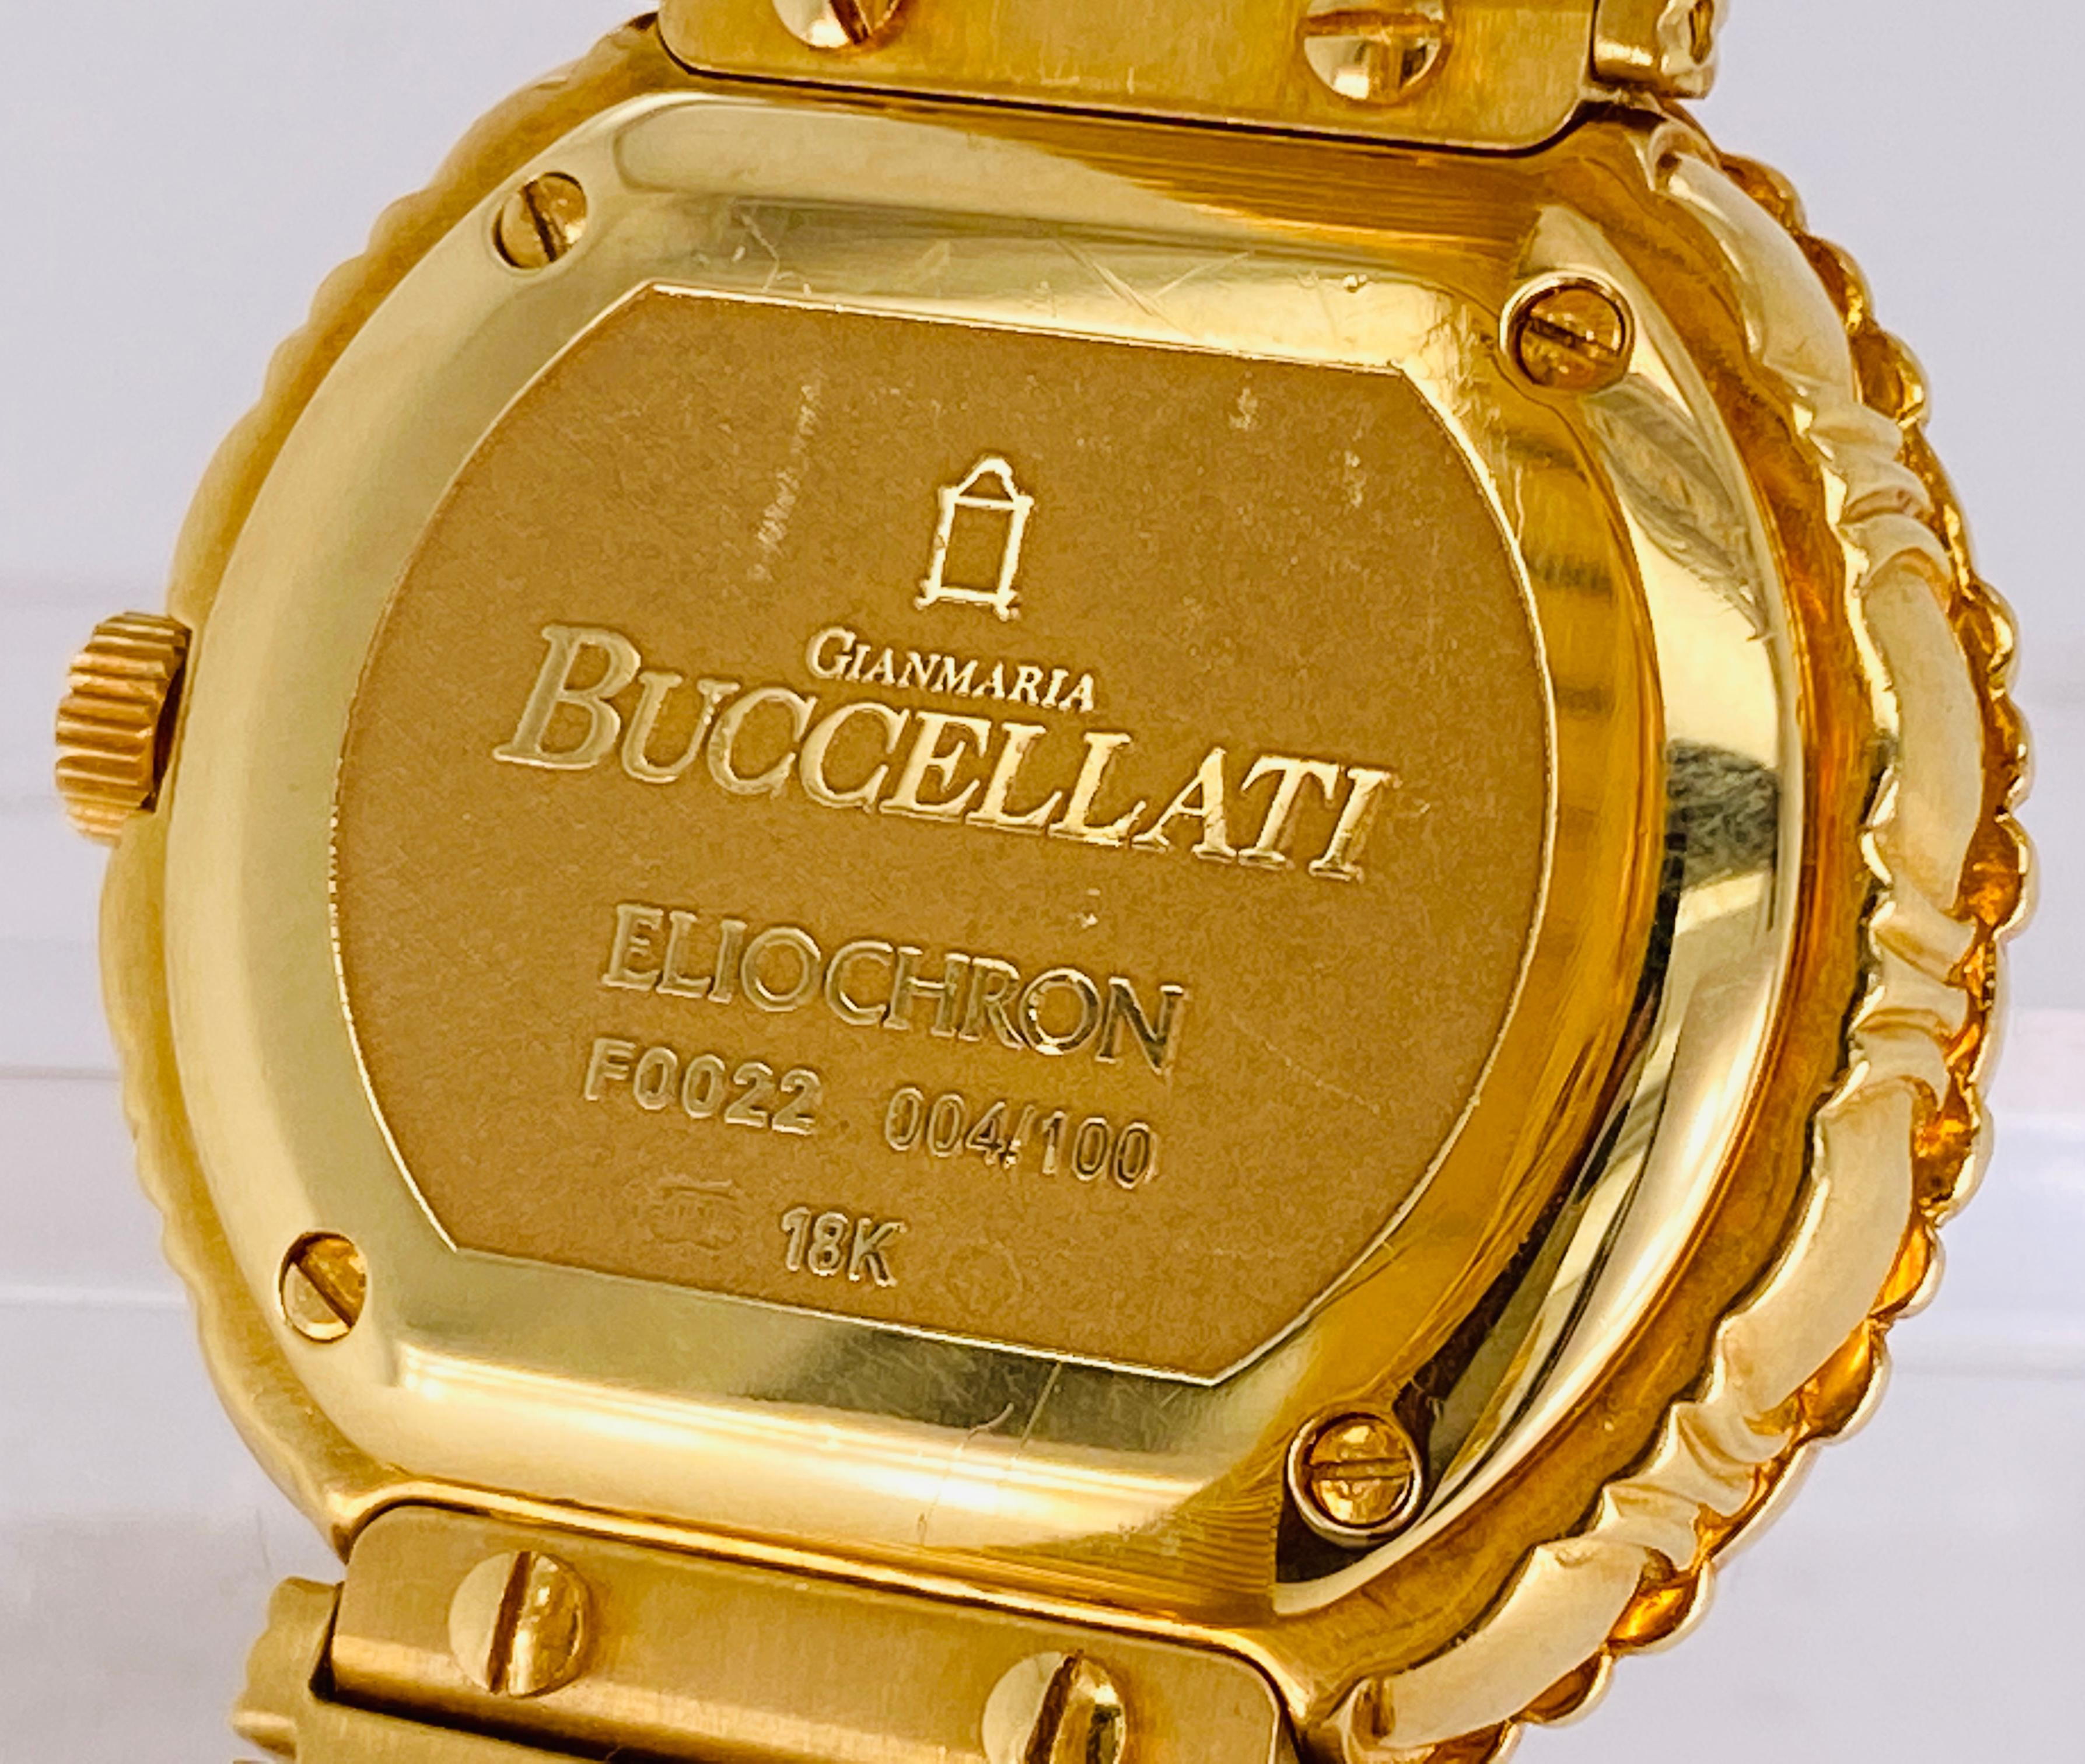 Buccellati Eliochron 18k Gold Watch In Excellent Condition In Carmel, CA